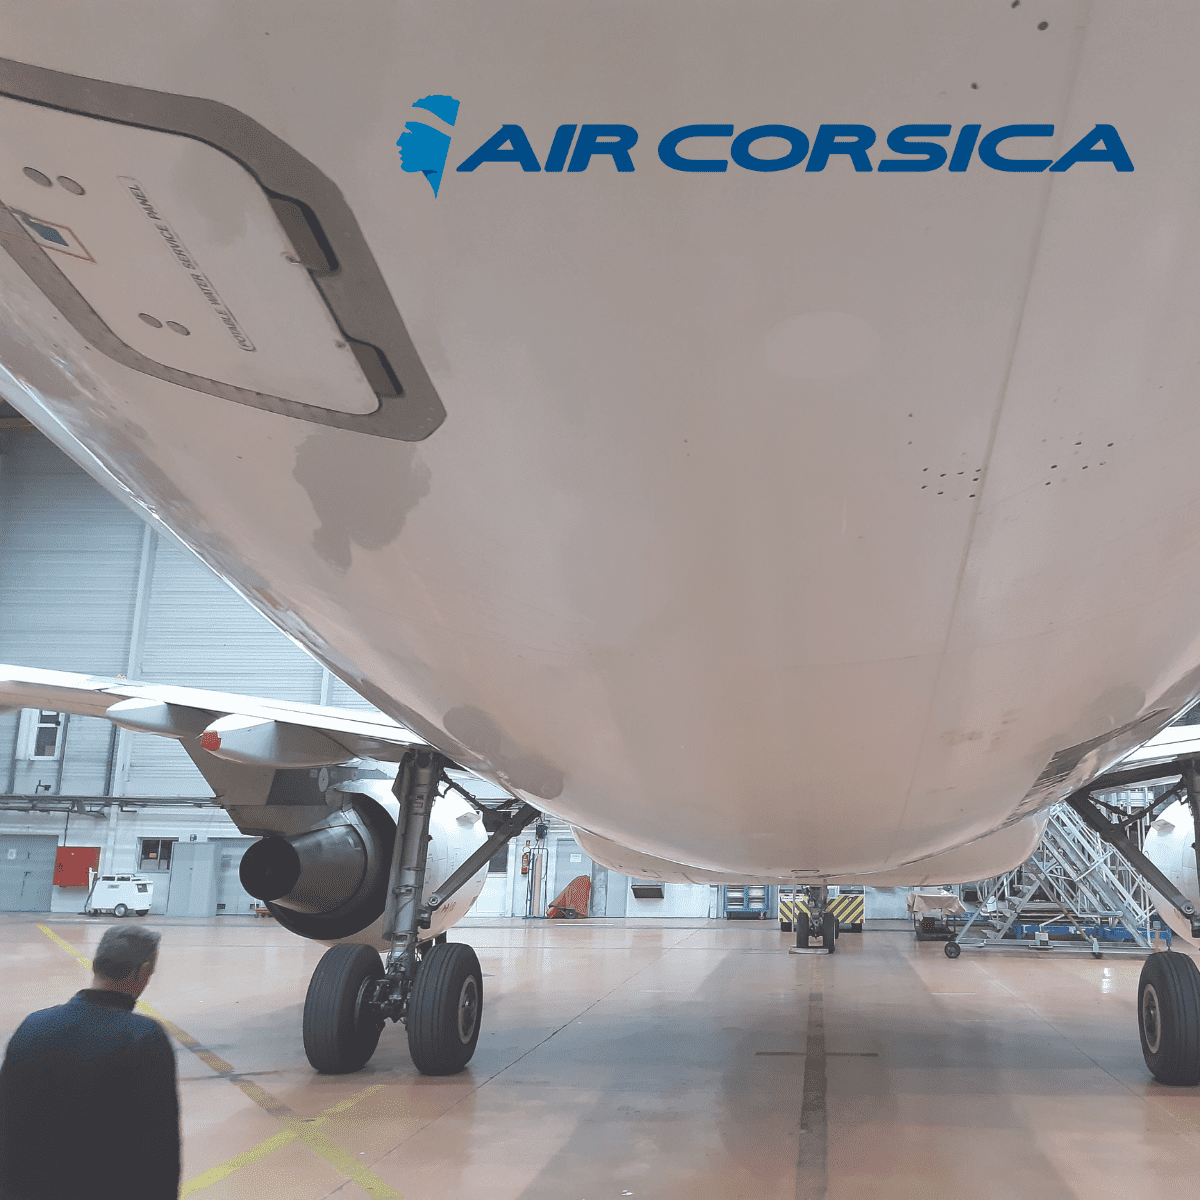 Aeronautique Avion Aéronef Air Corsica Airbus A320 Boeing B747 Reparation rapide de peinture MRO, Essai en vol avec Air Corsica